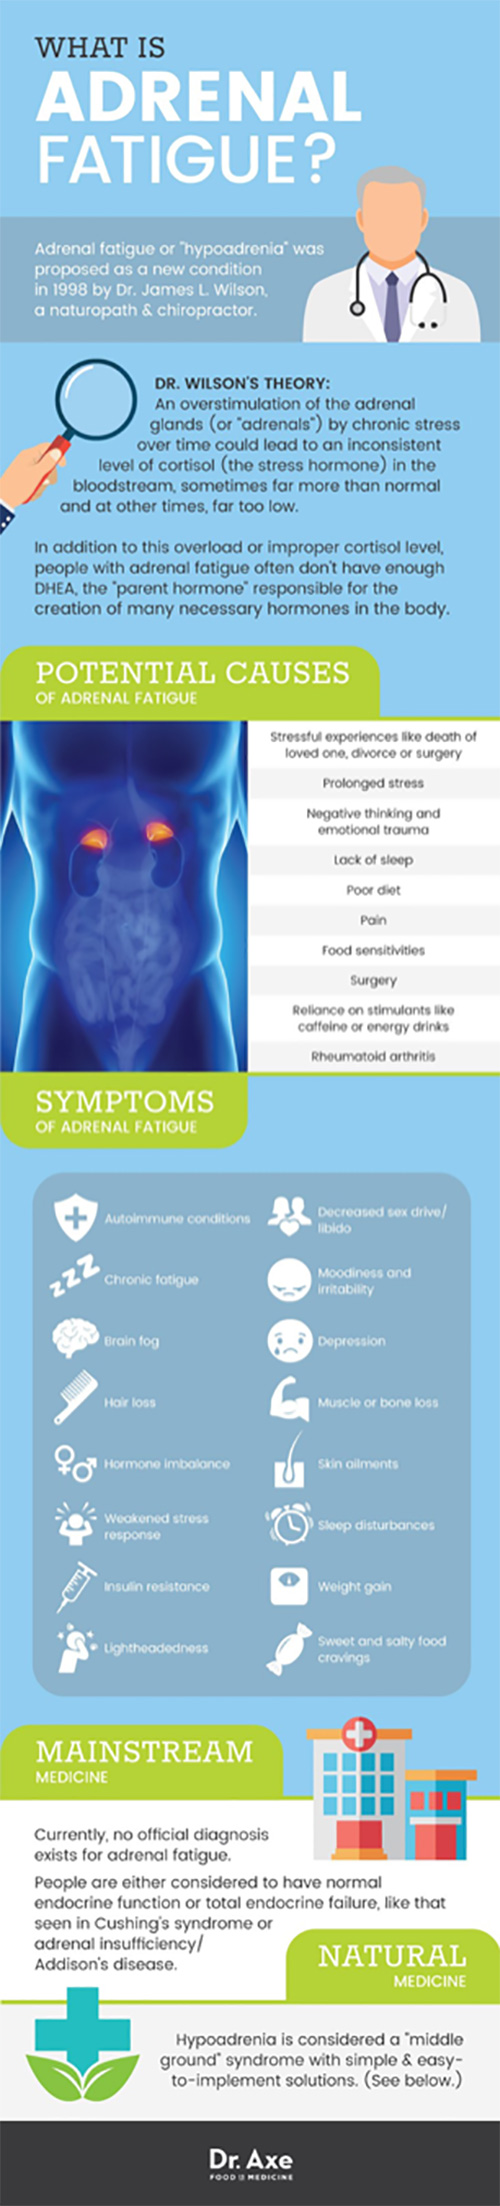 Adrenal fatigue syndrome symptoms of 7 Common